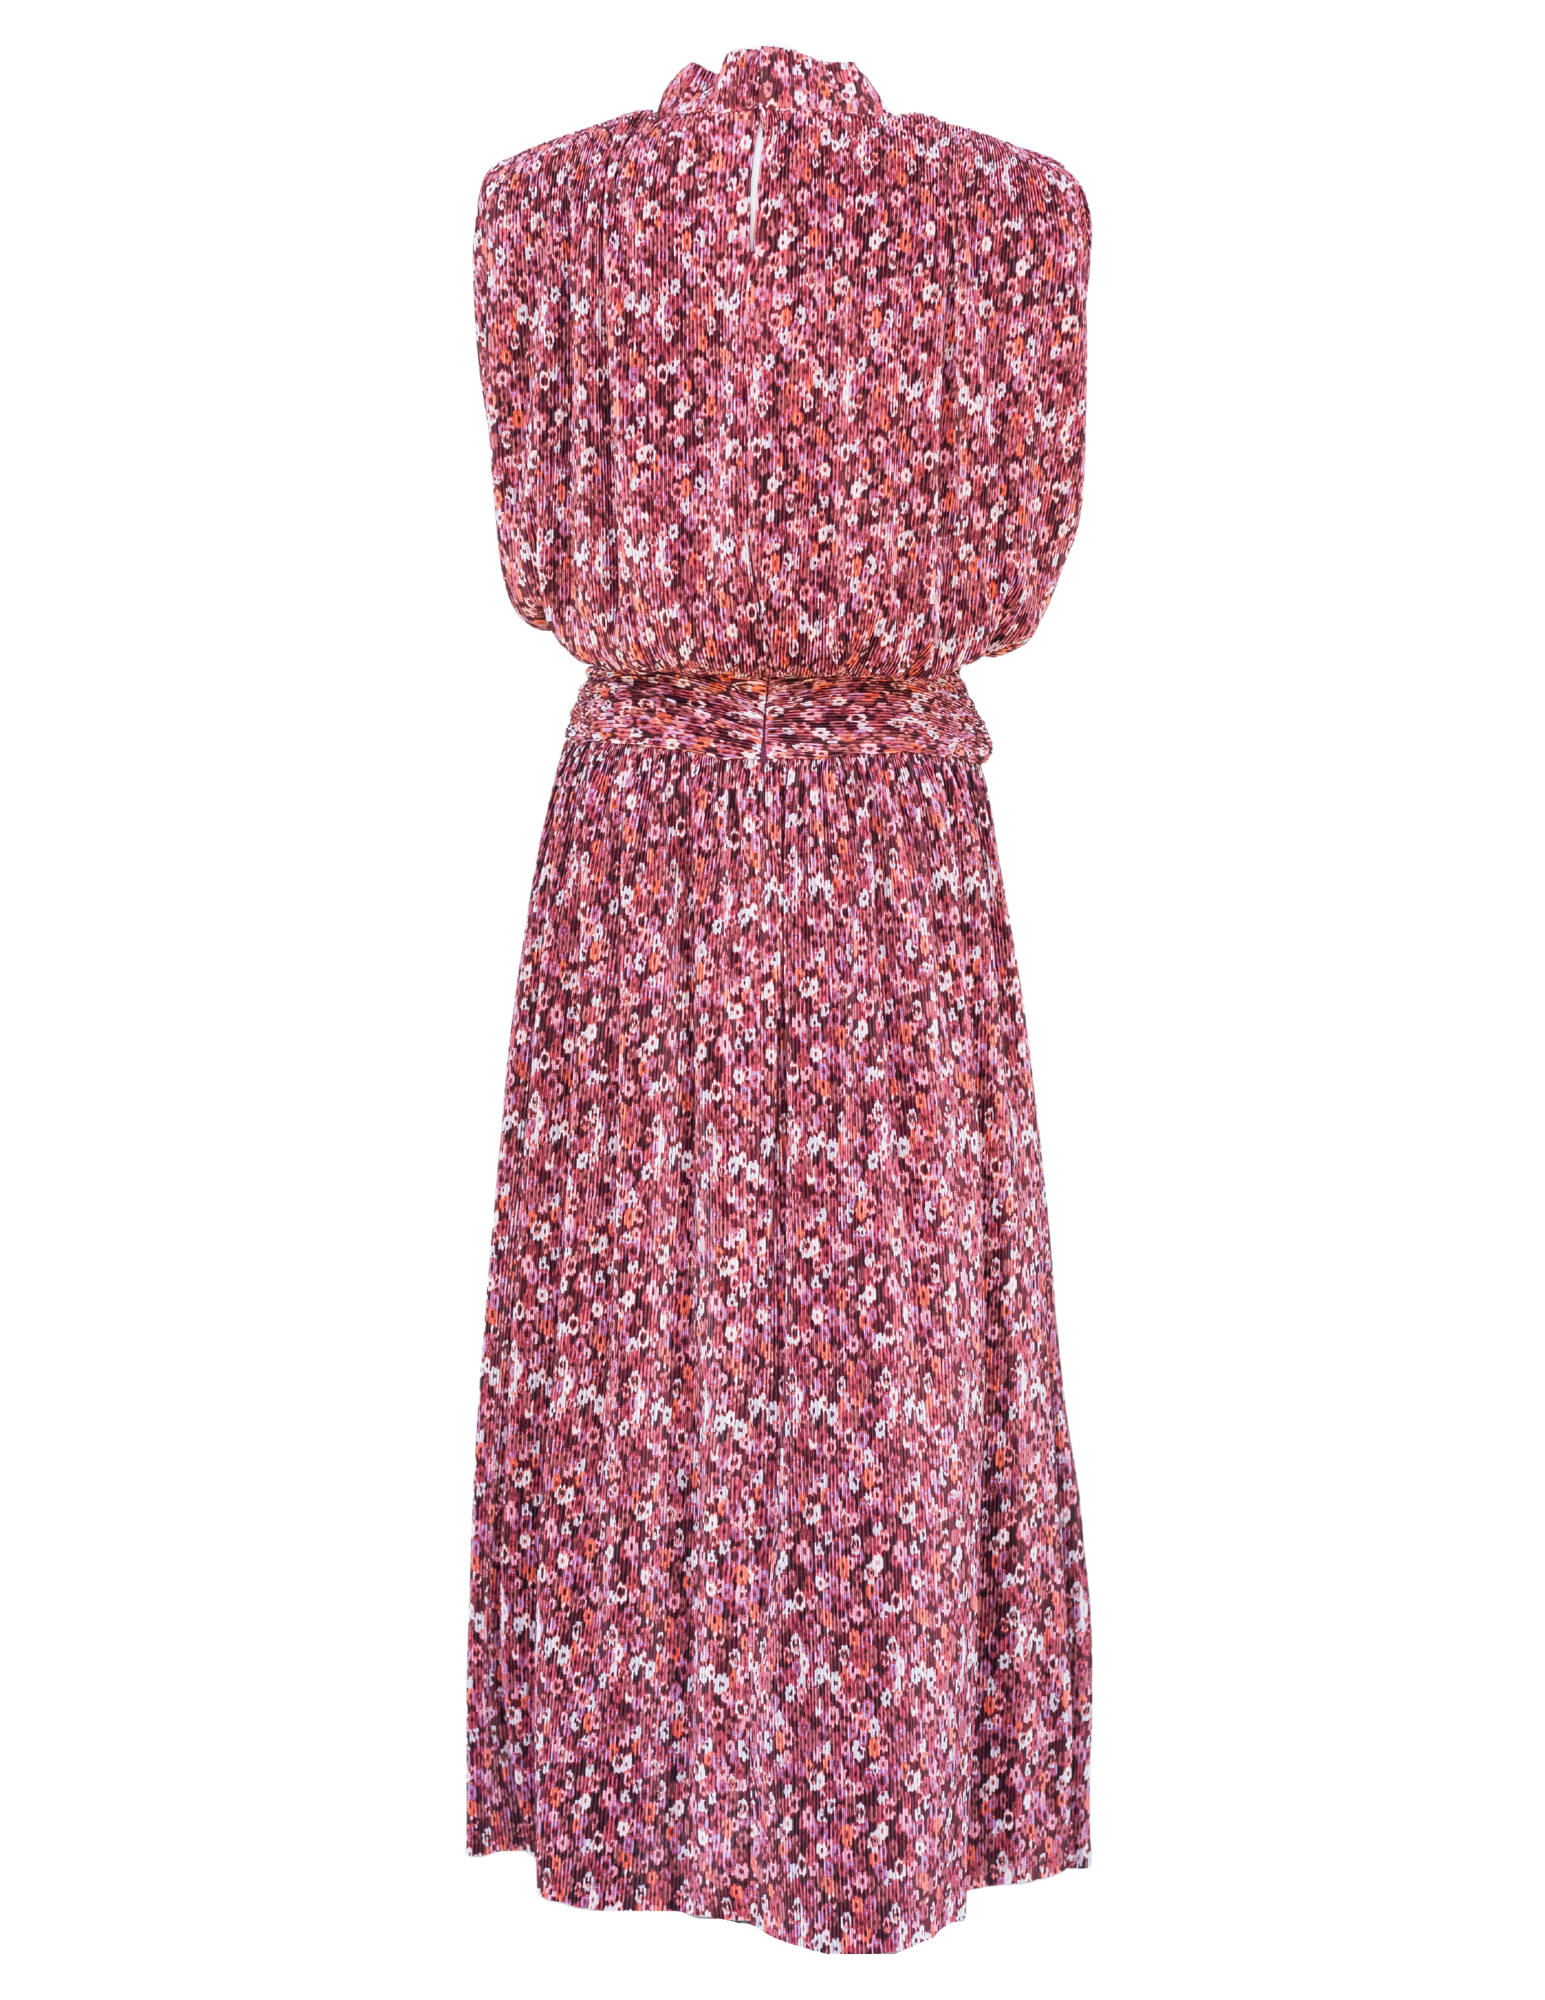 Solange Dress - Ruby Print